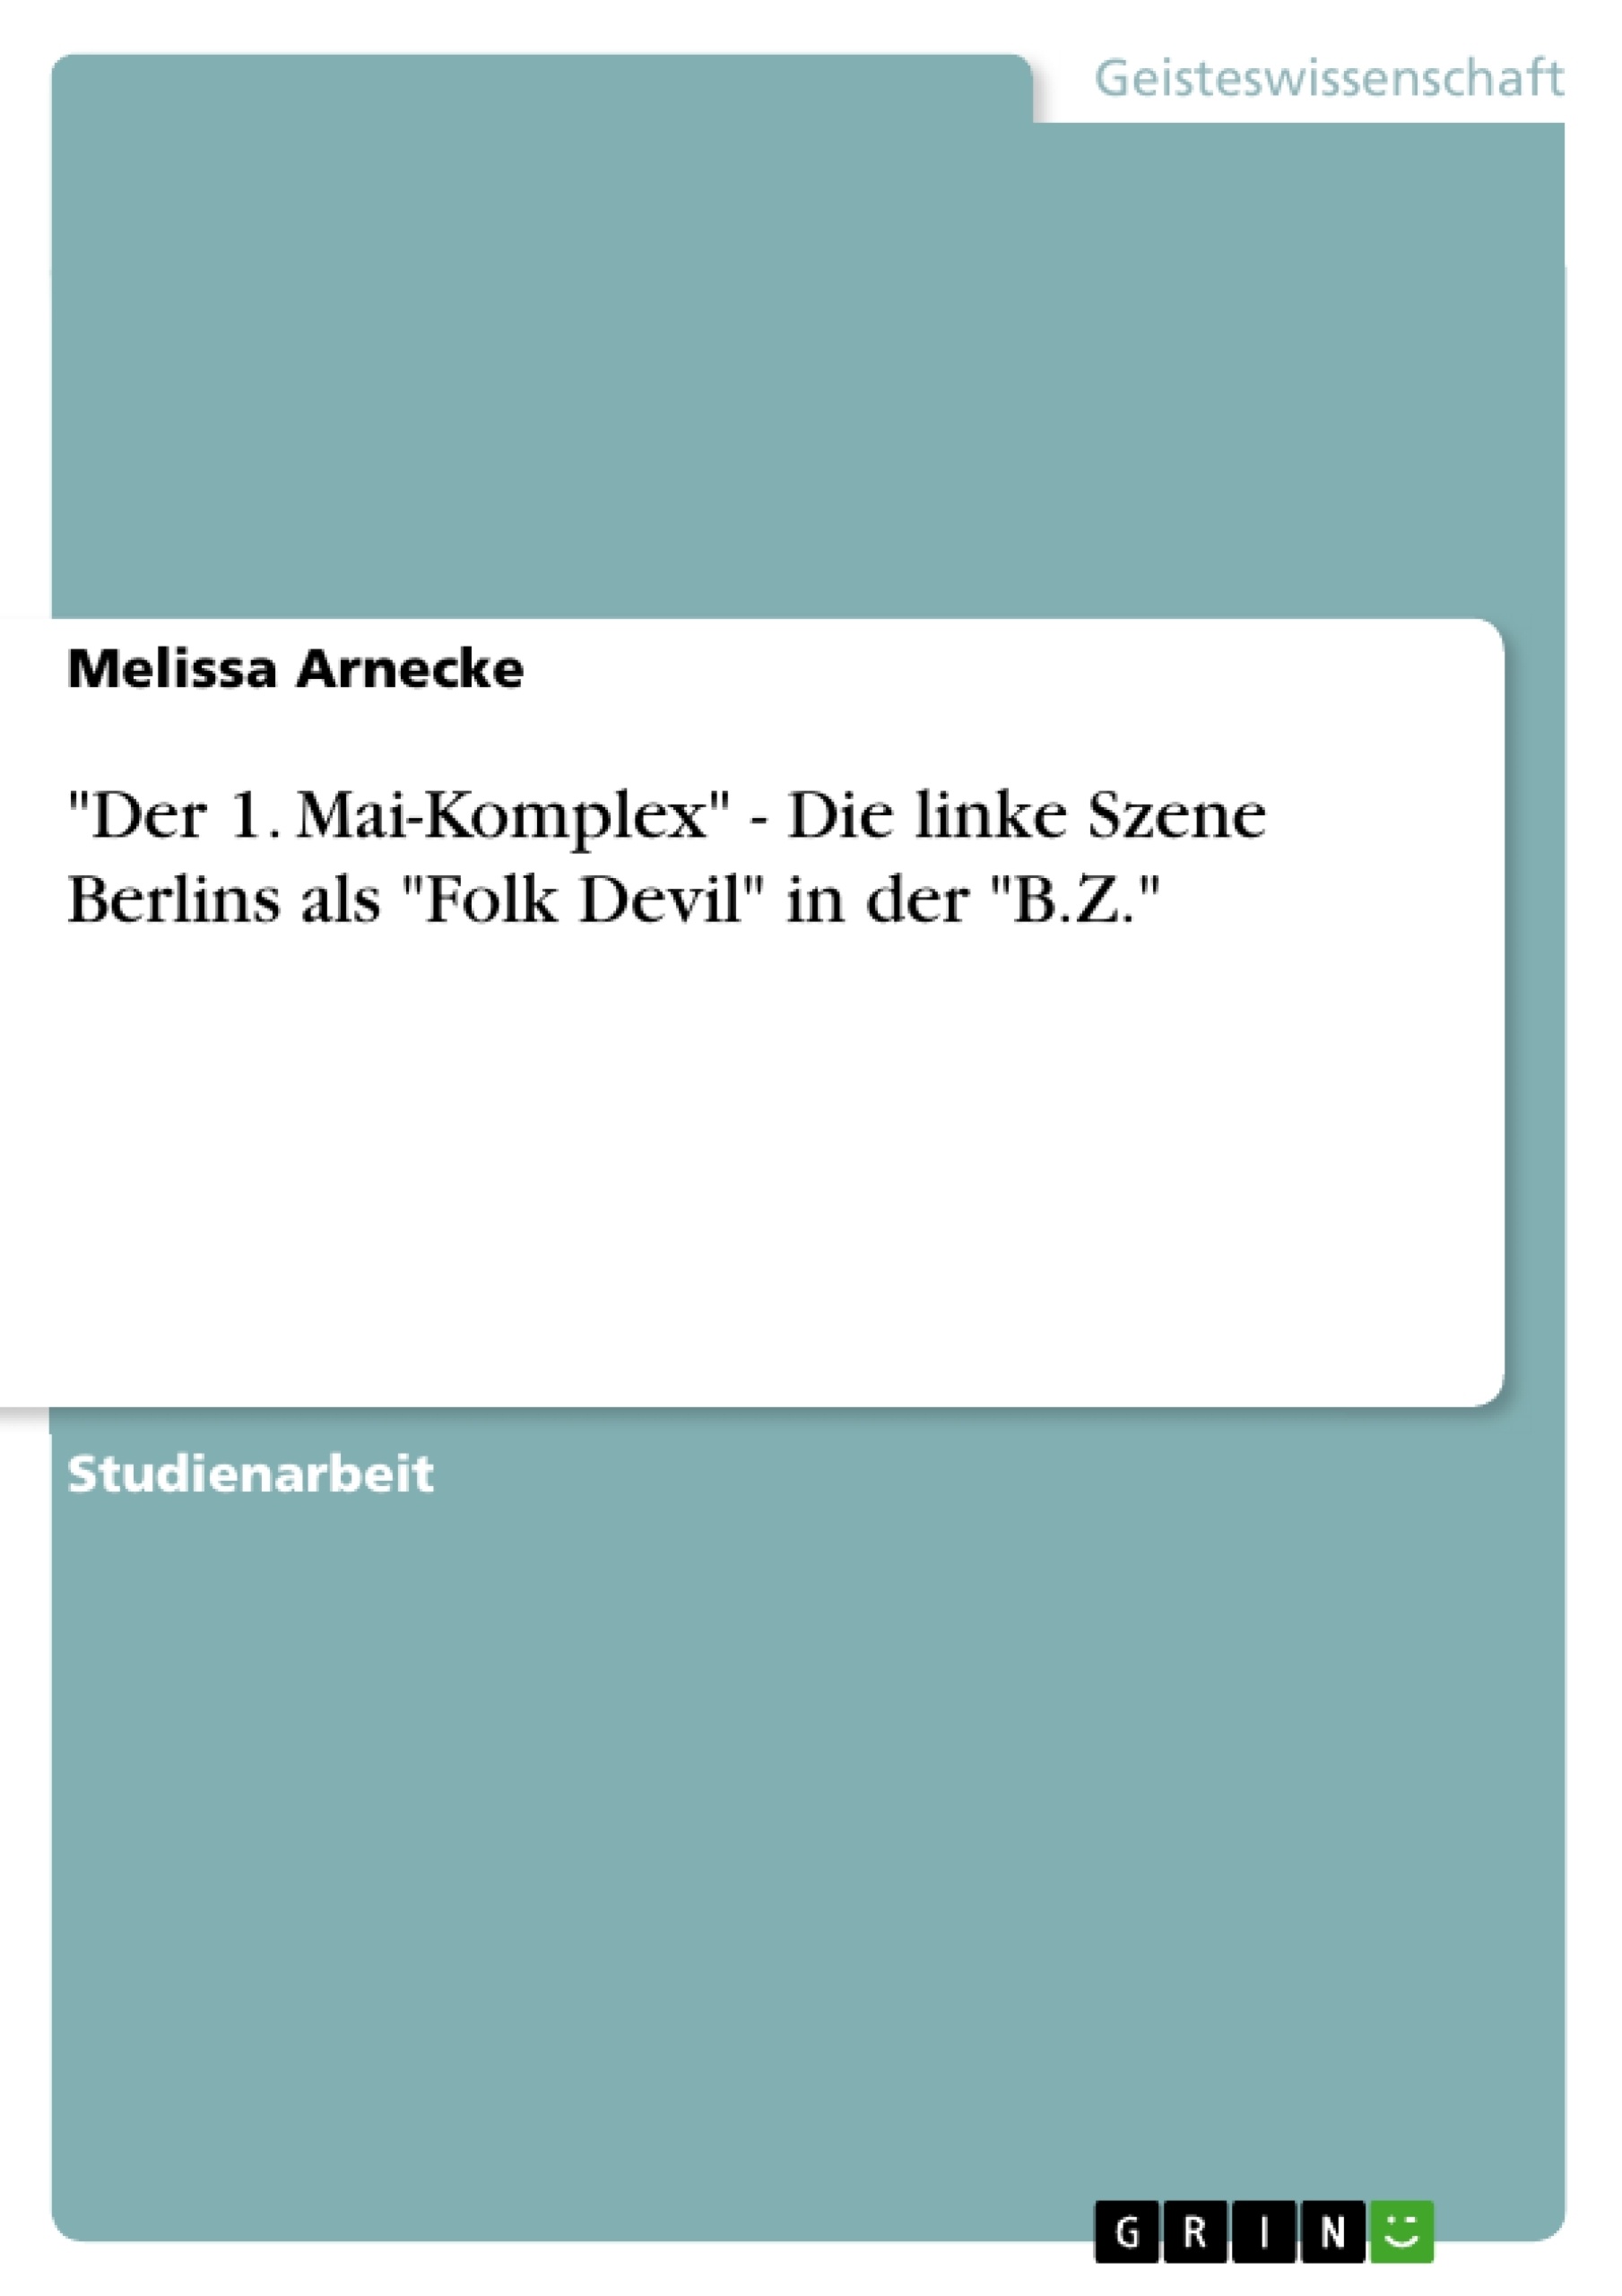 Titel: "Der 1. Mai-Komplex" - Die linke Szene Berlins als "Folk Devil" in der "B.Z."